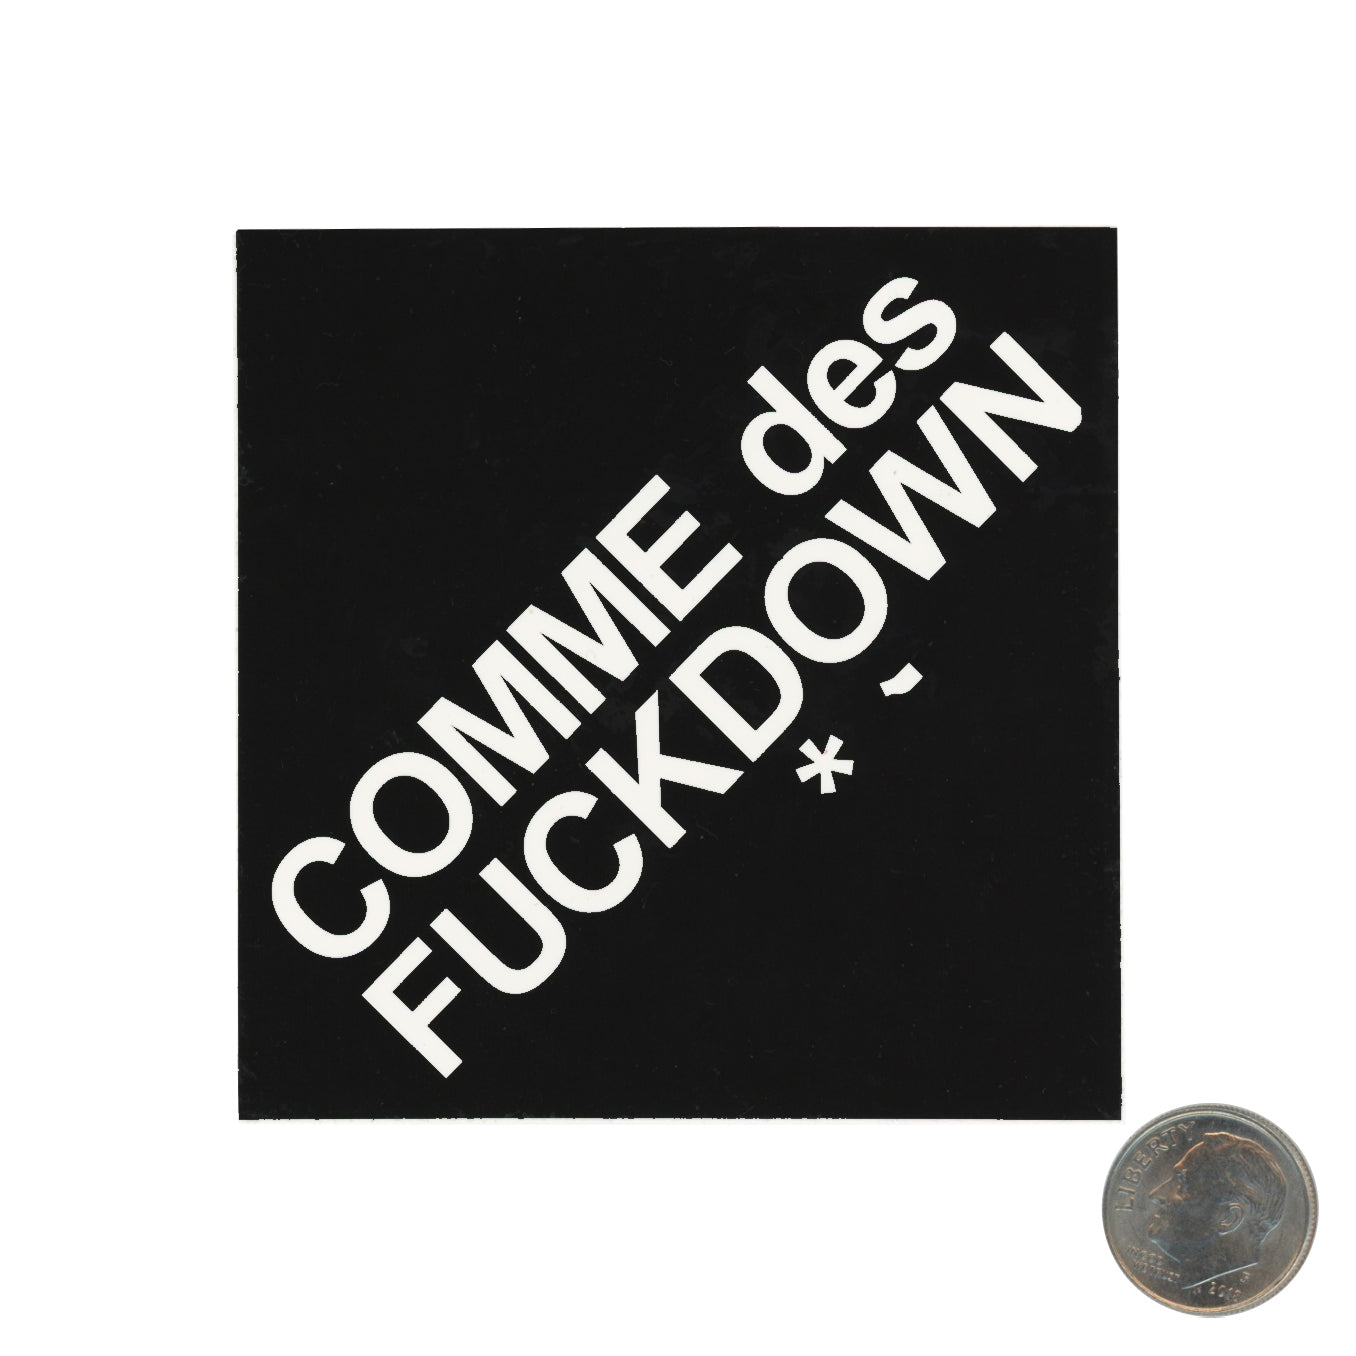 COMME des FUCKDOWN Logo Sticker with dime